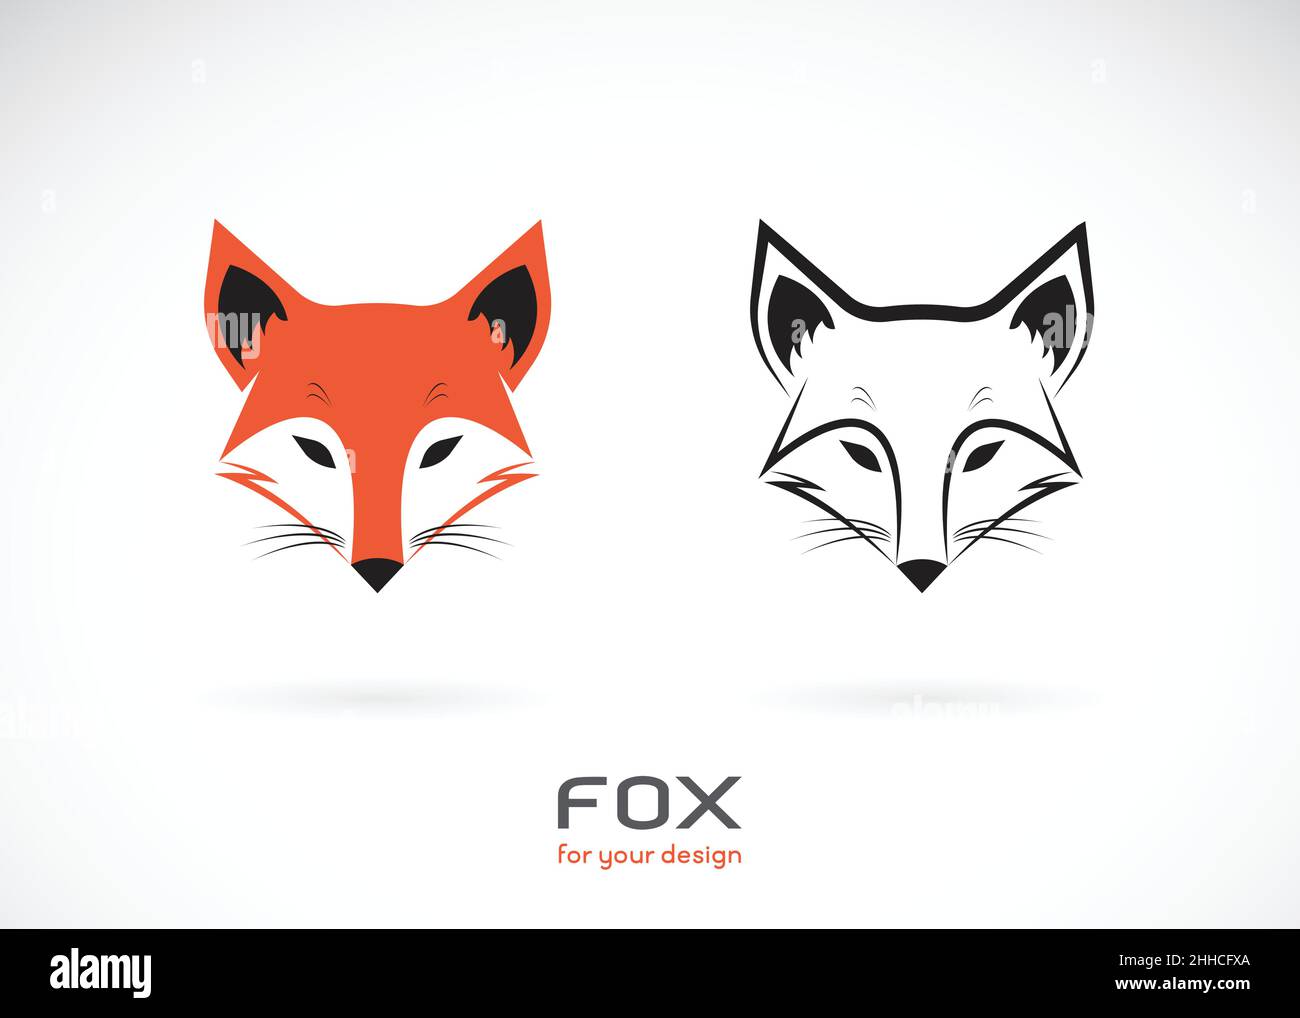 Vector of fox head design on white background., Wild Animals., Fox head logos or icons., Easy editable layered vector illustration. Stock Vector